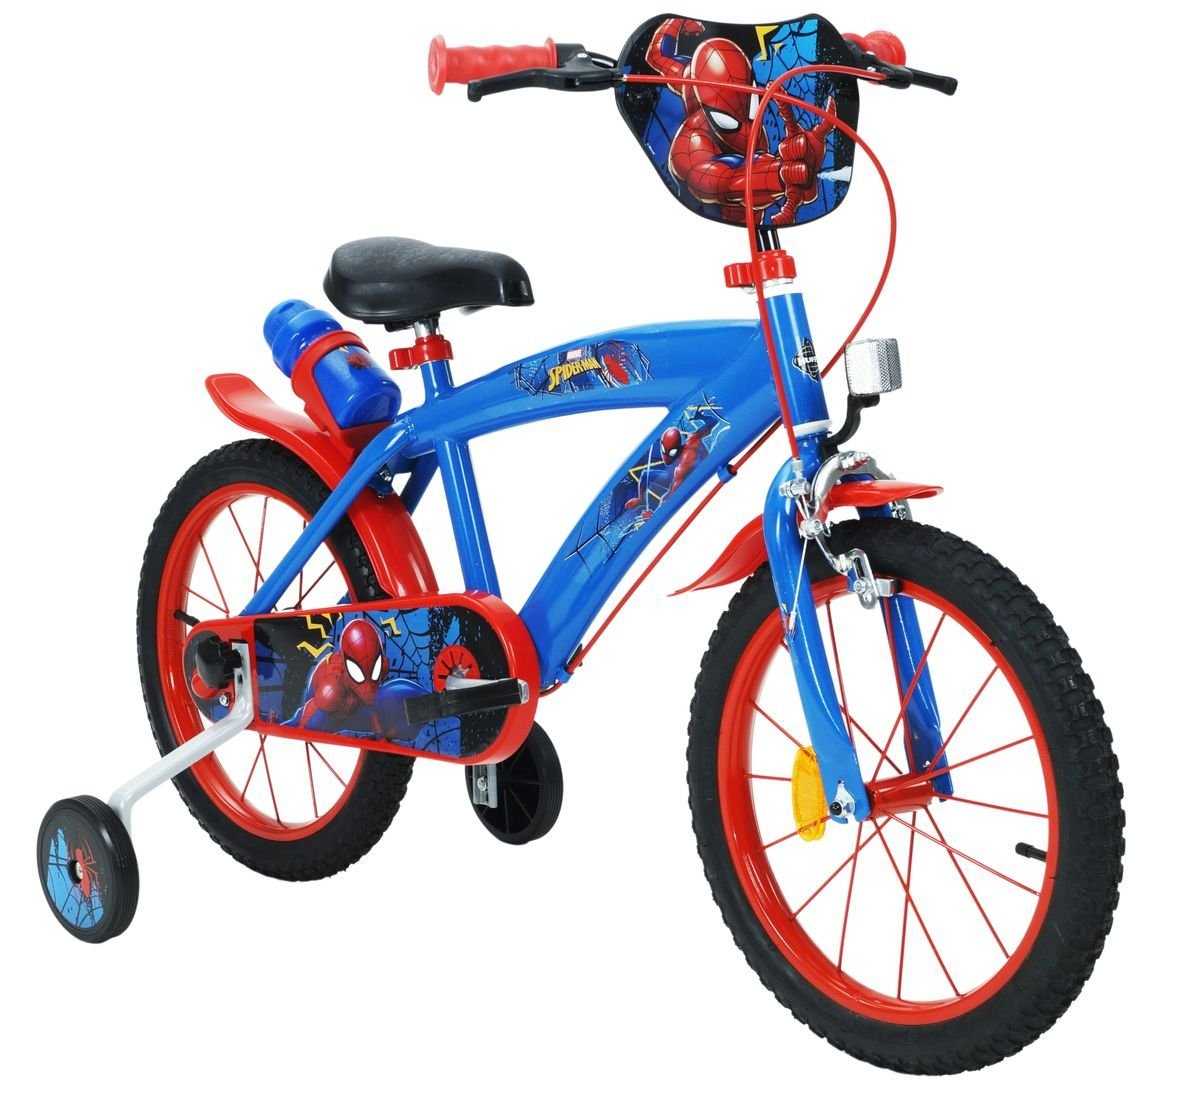 Toimsa Bikes Kinderfahrrad 16 Zoll Kinder Fahrrad Jungenfahrrad Kinderfahrrad Rad Spiderman 21901, 1 Gang, Stützräder, Trinkflasche